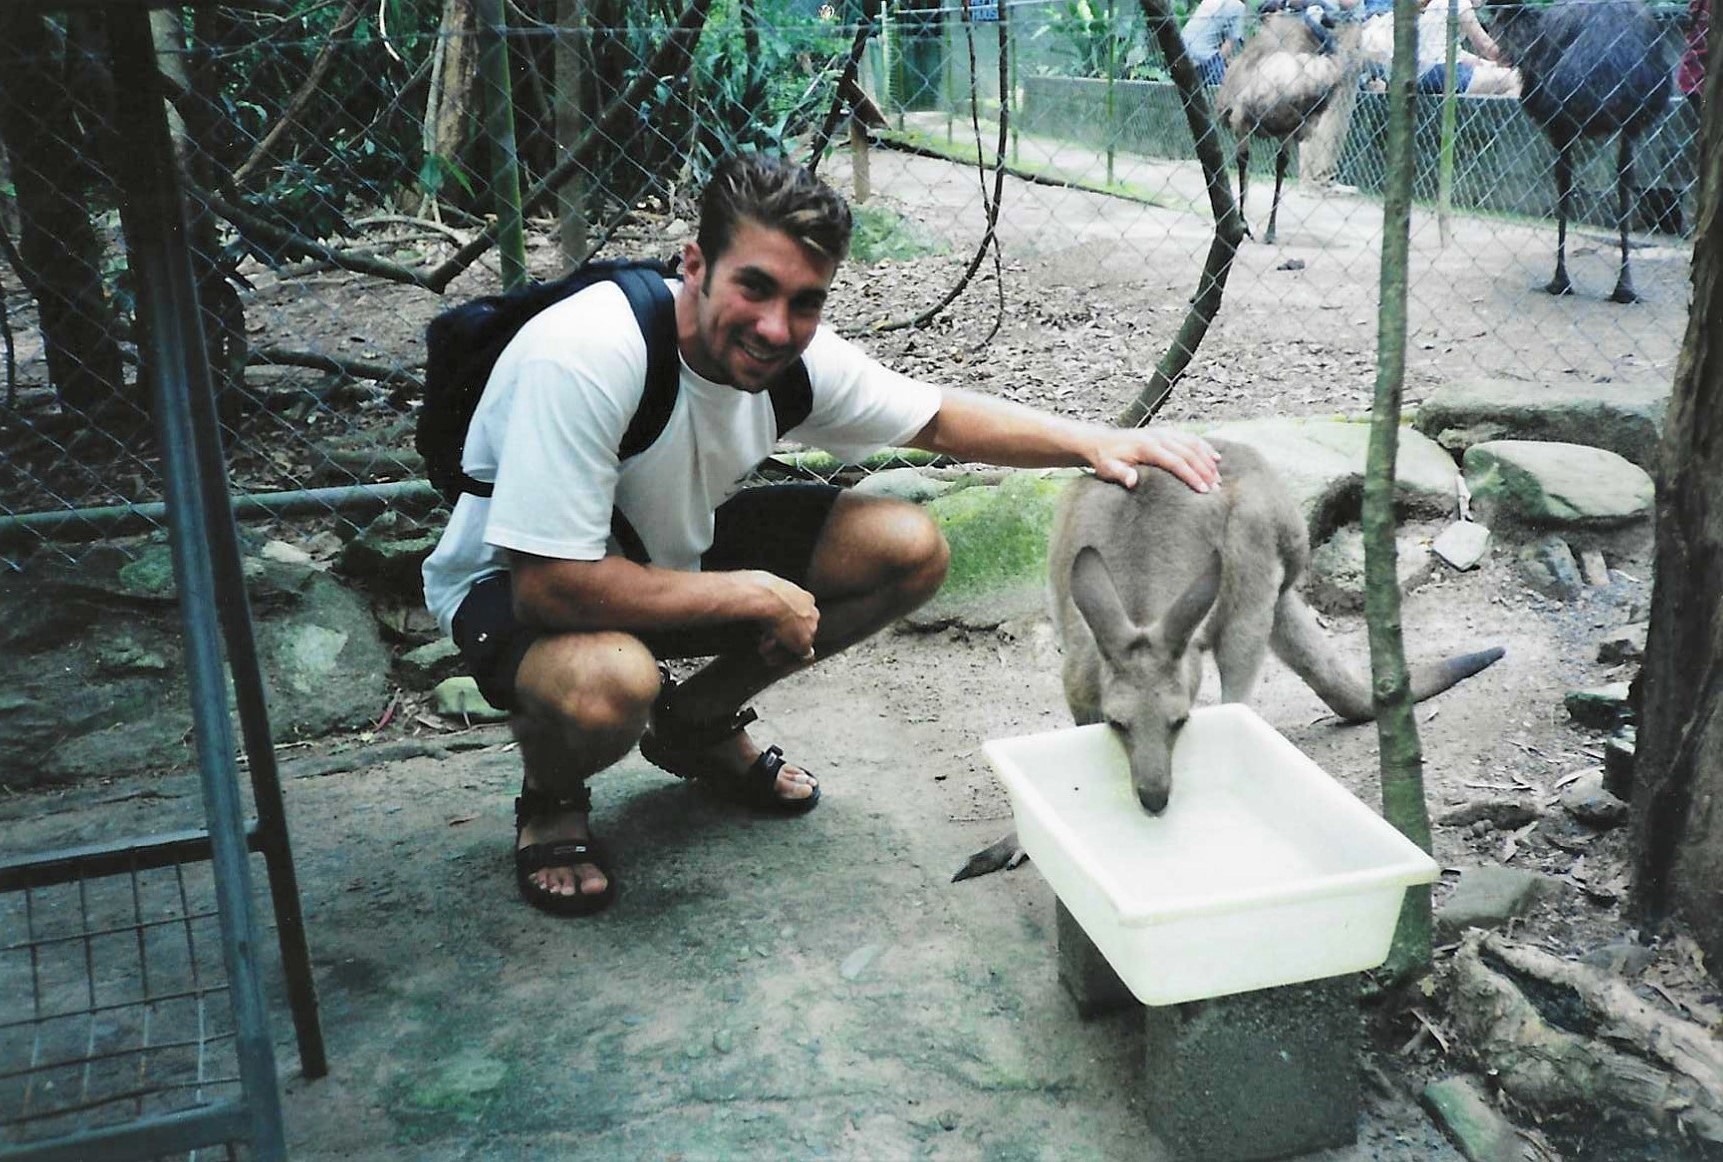 Petting a new buddy in Queensland, Australia